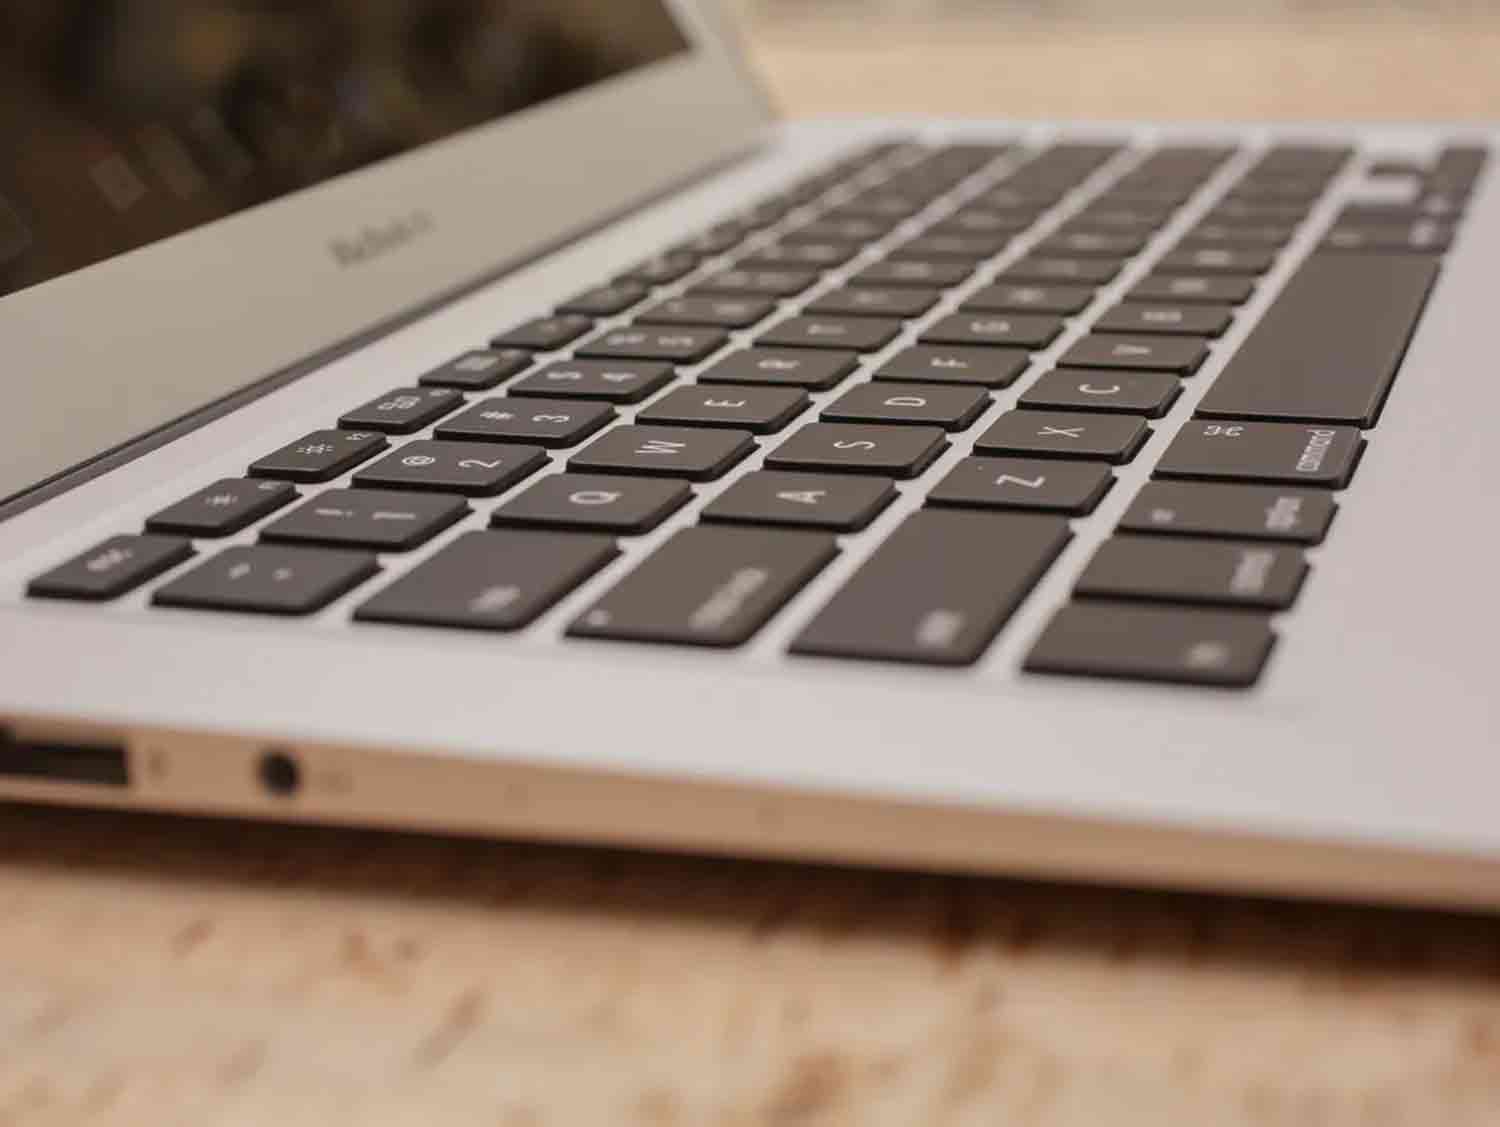 MacBook Air 2017 i5 08GB Keyboard Close-up